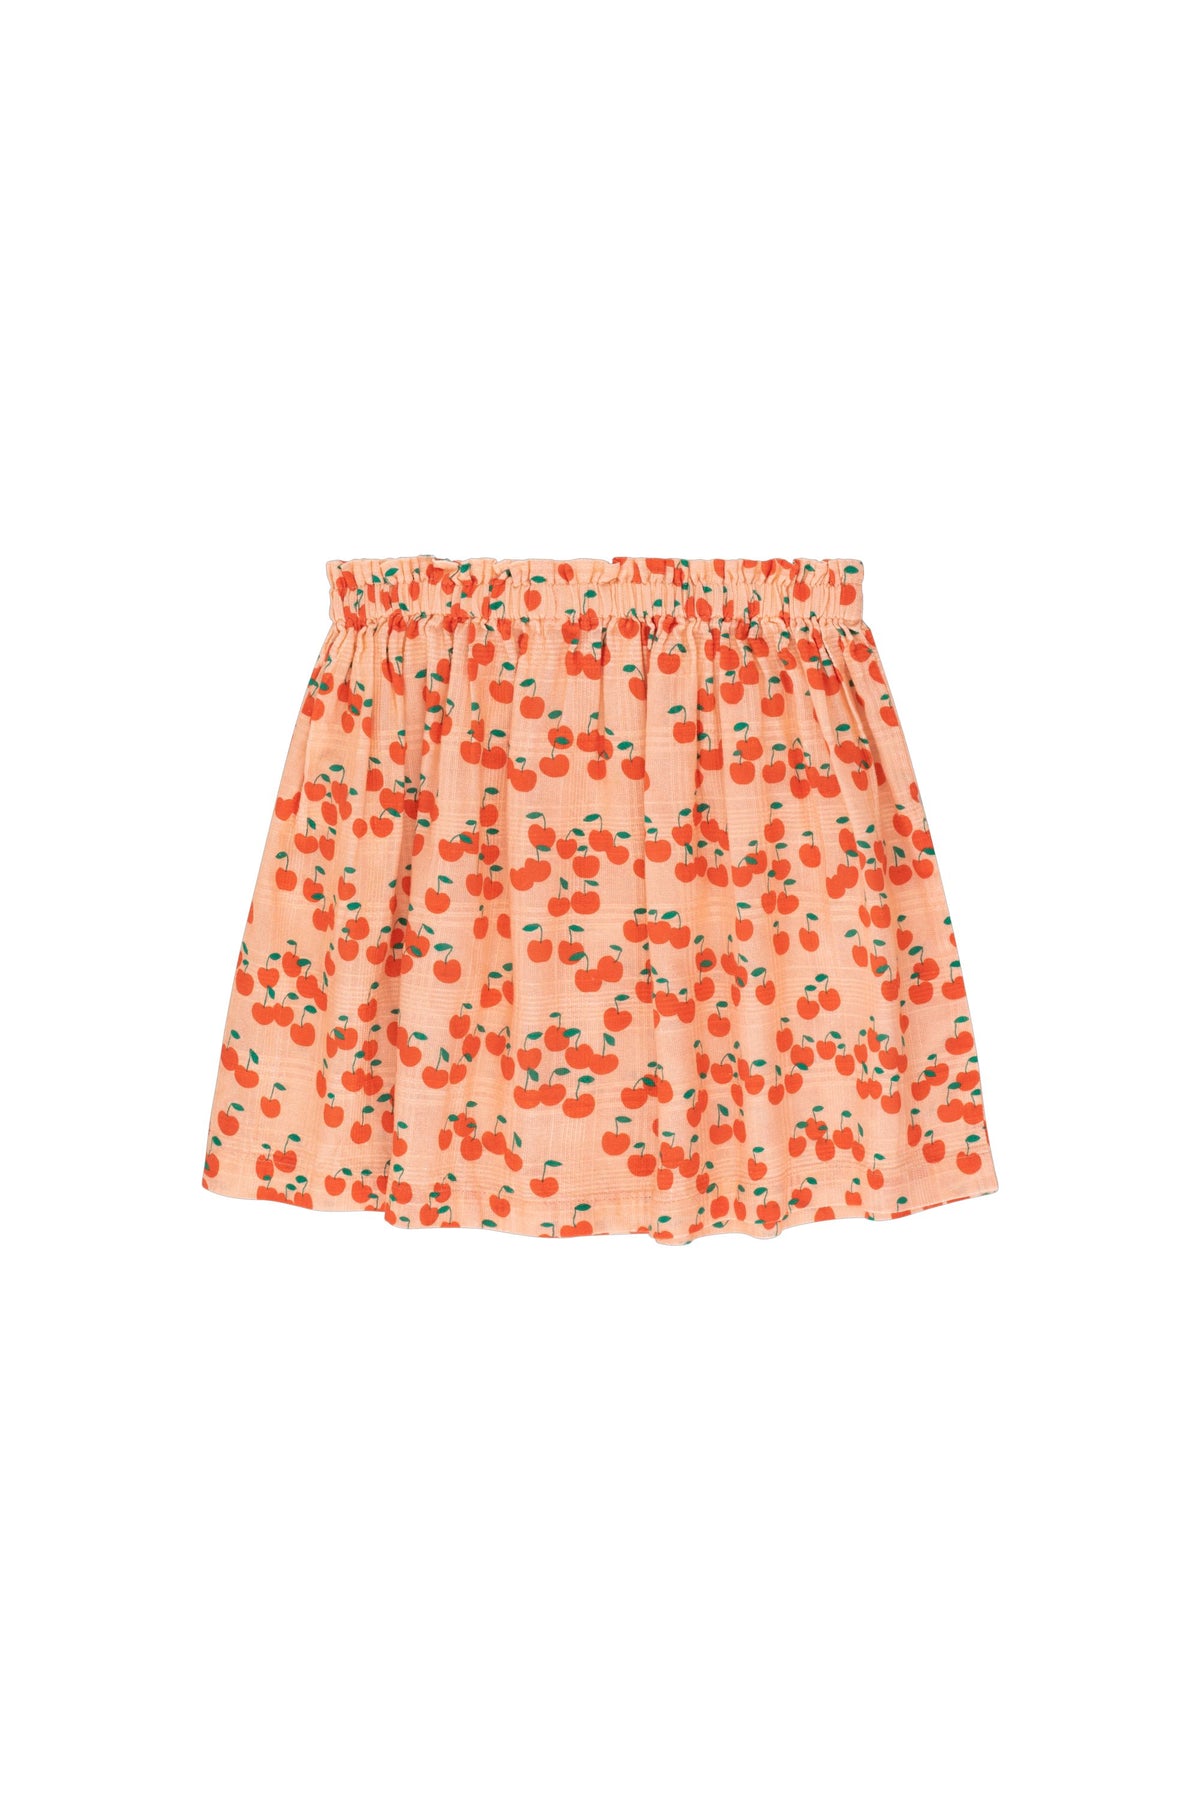 tiny cottons cherries short skirt - papaya & summer red